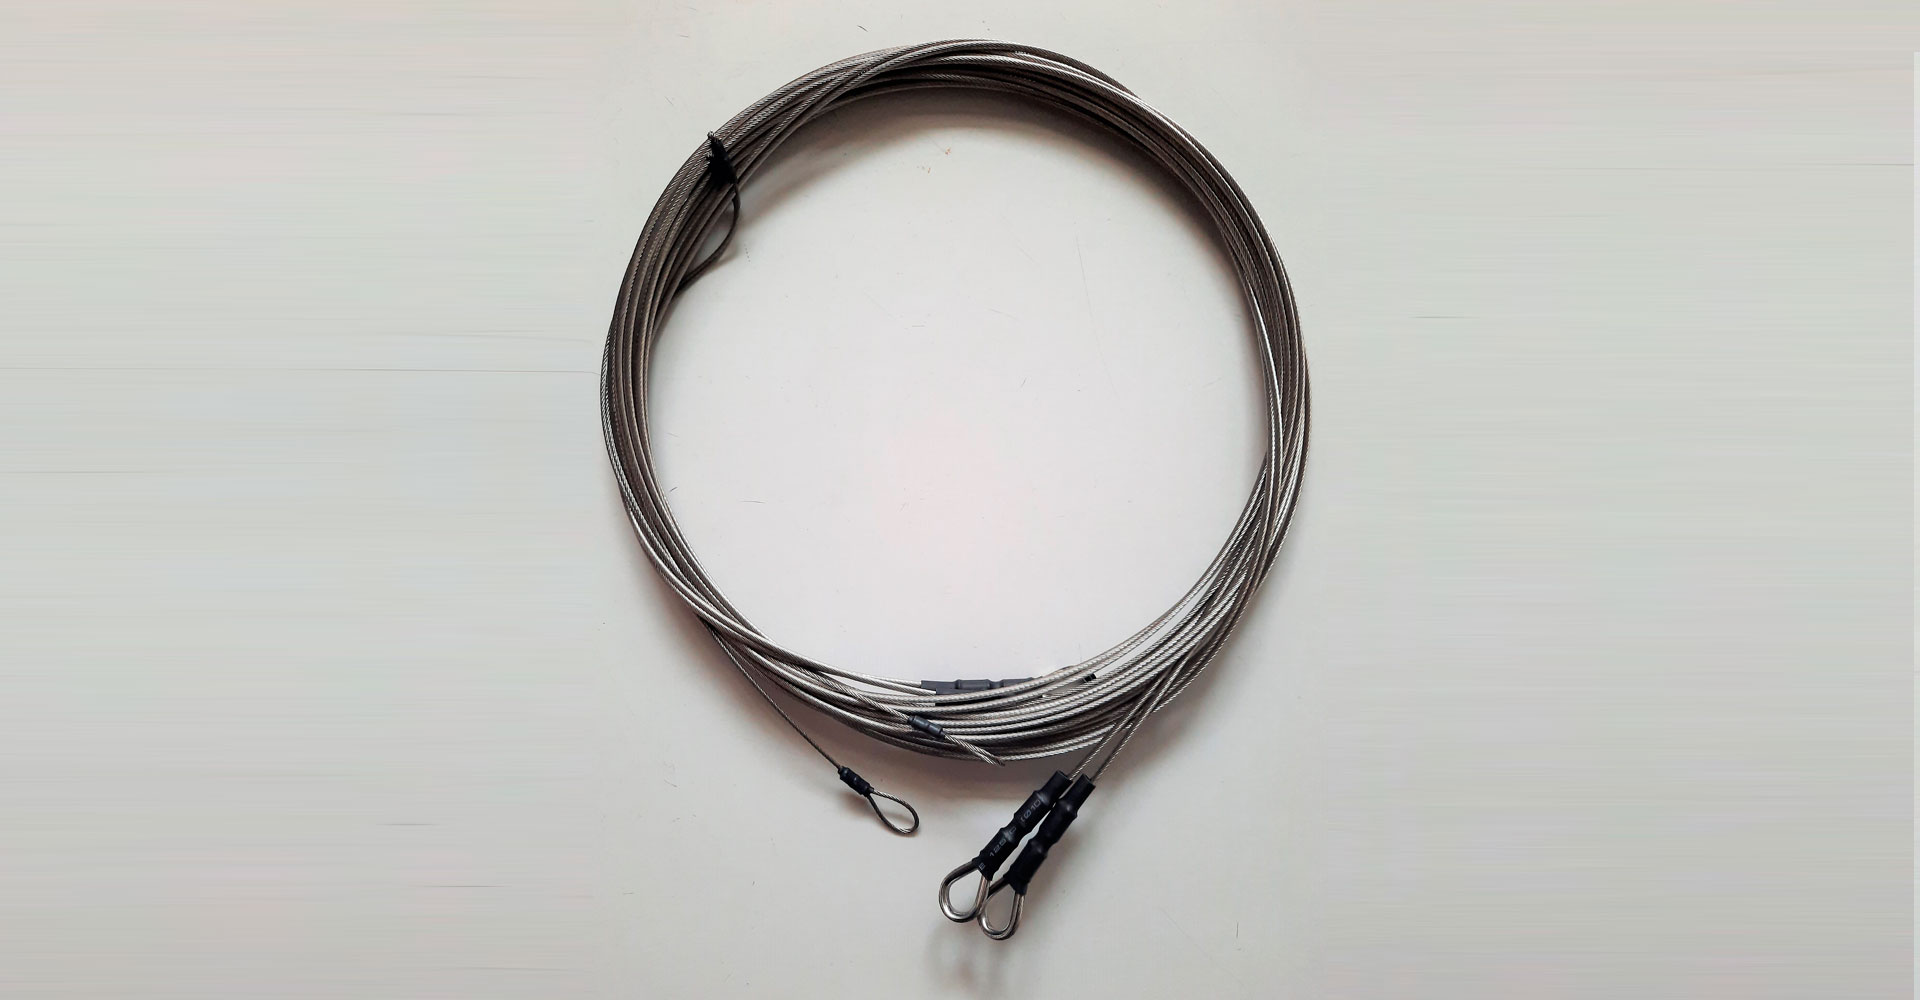 Art 503 – Sartia volante alta con terminale, cavo acc. inox 1×19 diam. 2.5 mm completa di sartiola preventor